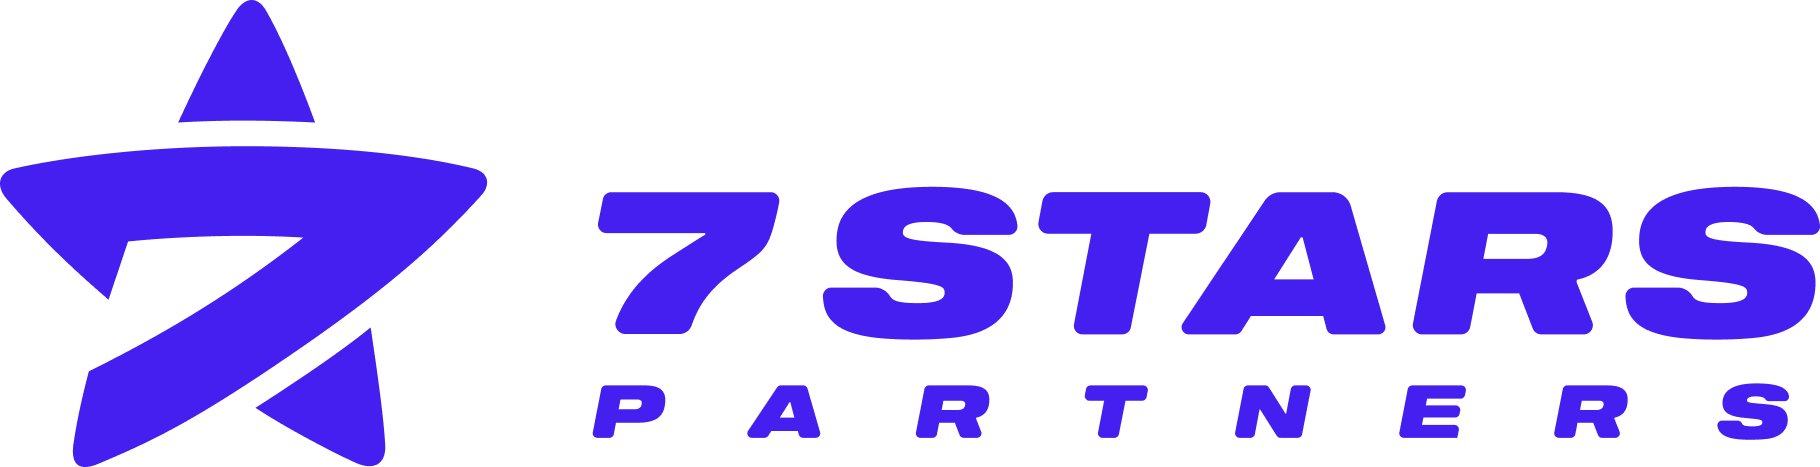 7stars-partners-logo